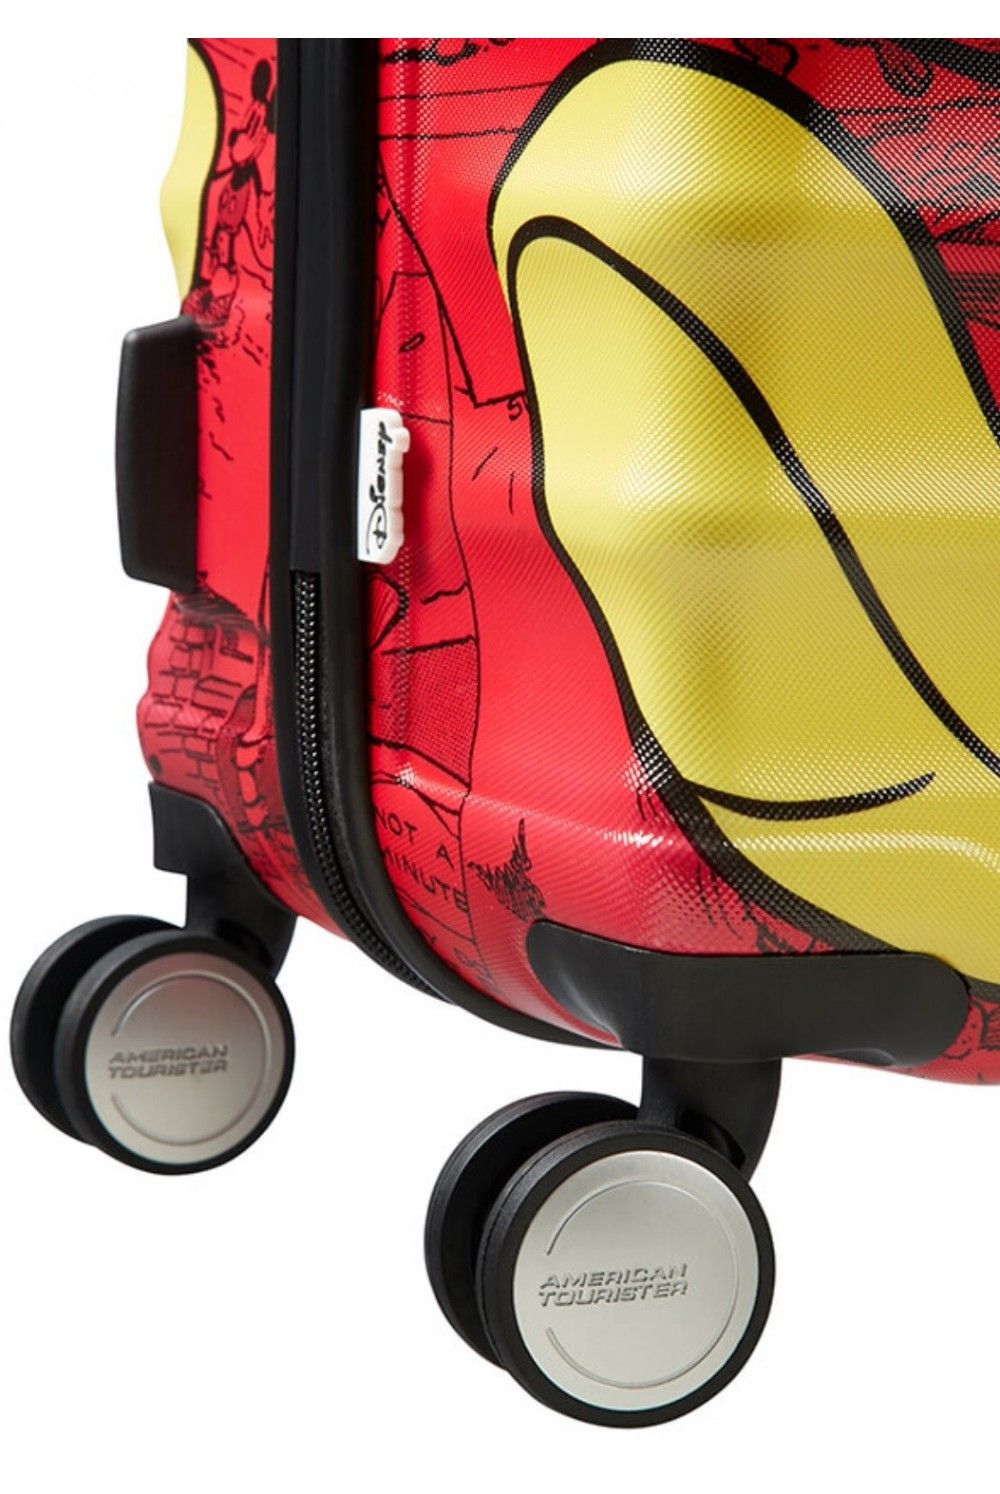 Kids suitcase AT Wavebreaker Comics Red 67cm 64Liter 4 wheel